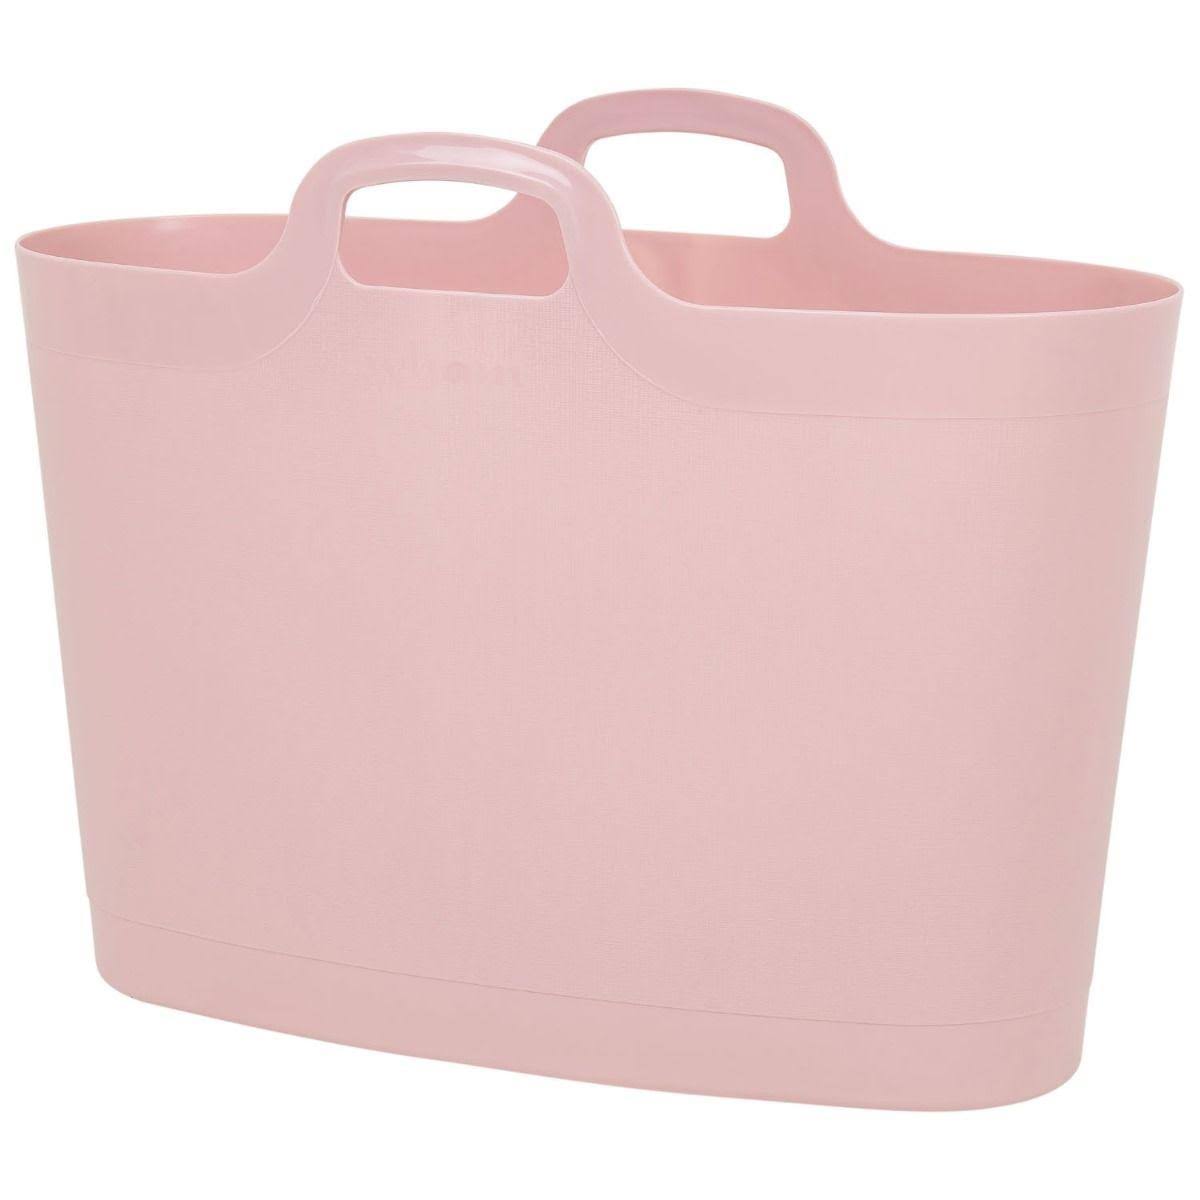 Wham Storage X Large Flexi Bag - Blush Pink (29955) colour: Blush Pink